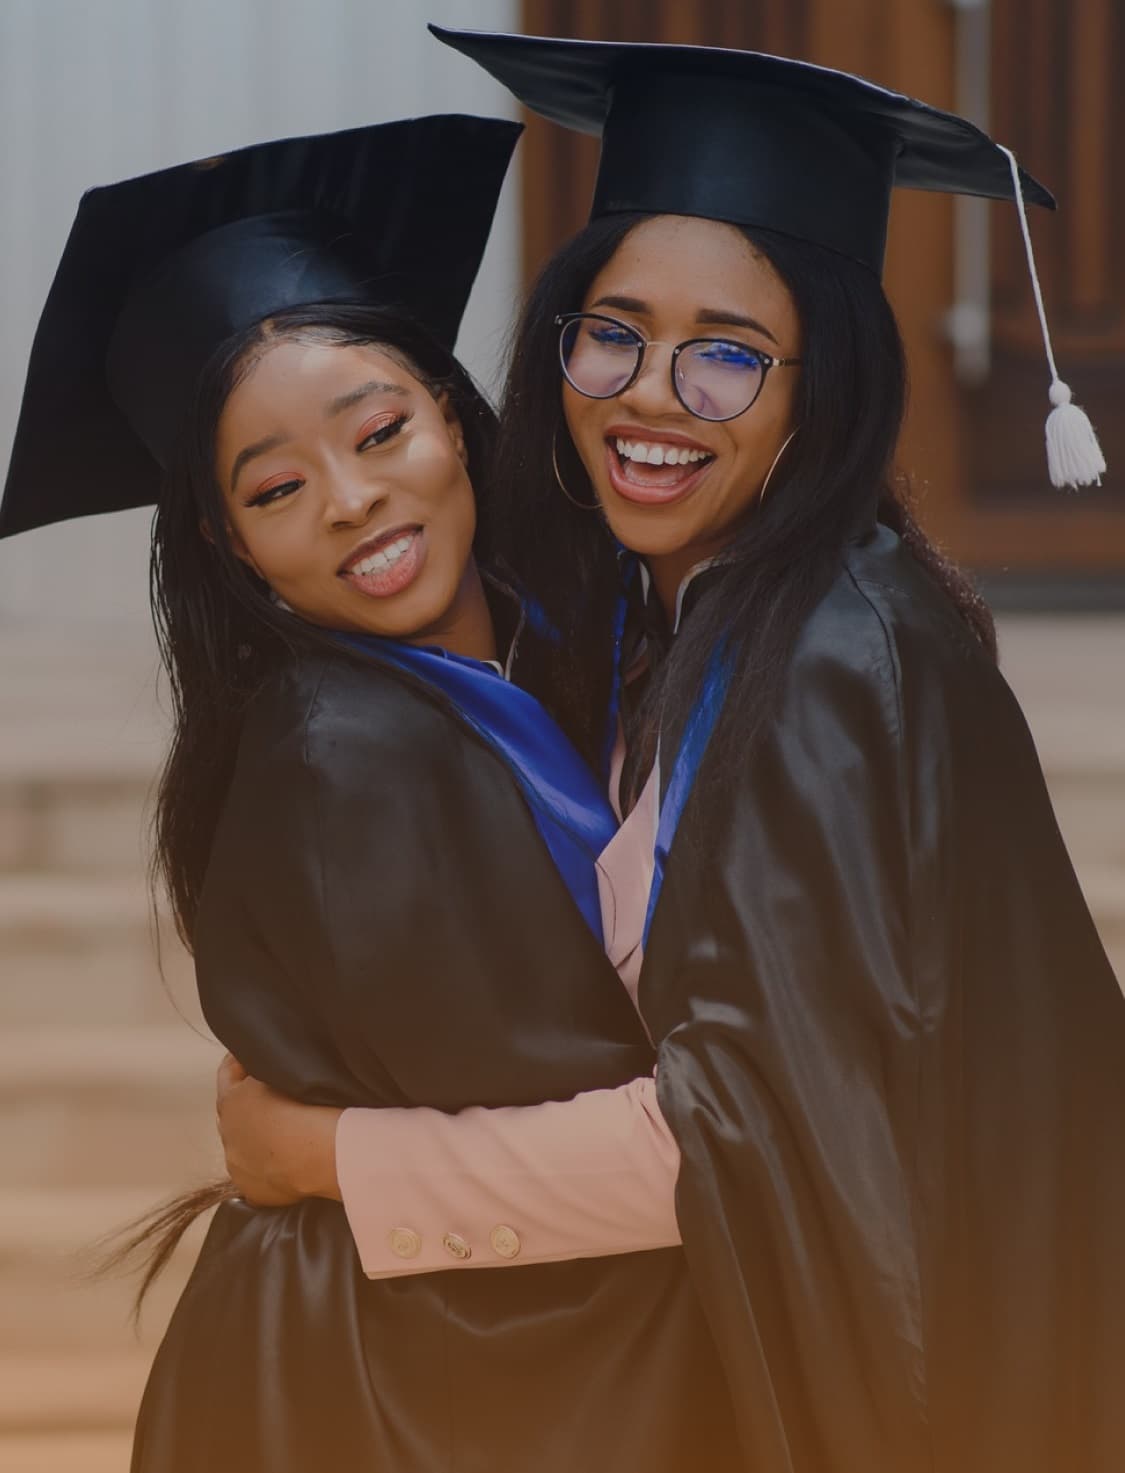 Two women share a heartfelt hug to celebrate their graduation.